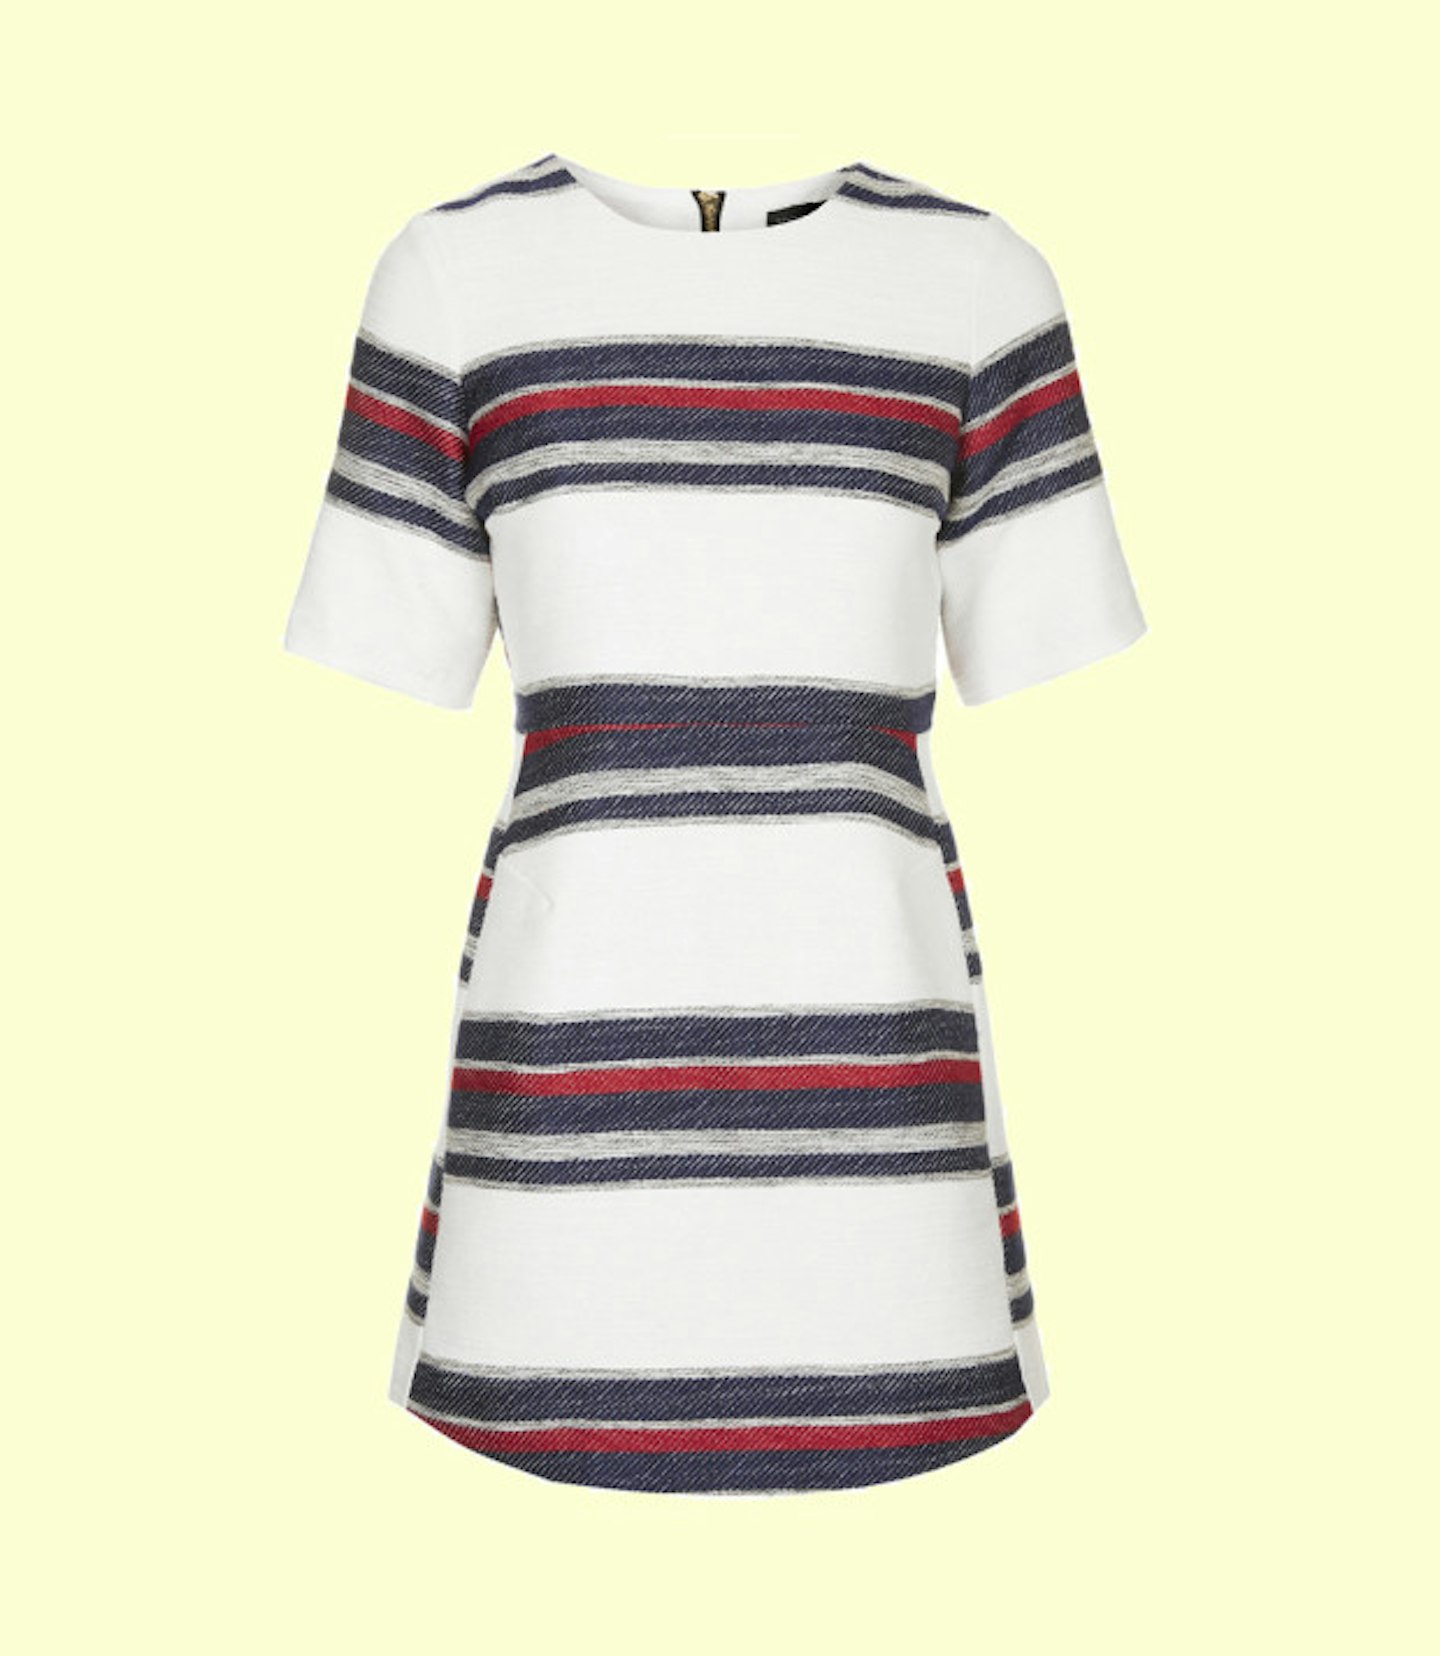 oscars-shopping-topshop-white-blue-red-stripe-dress